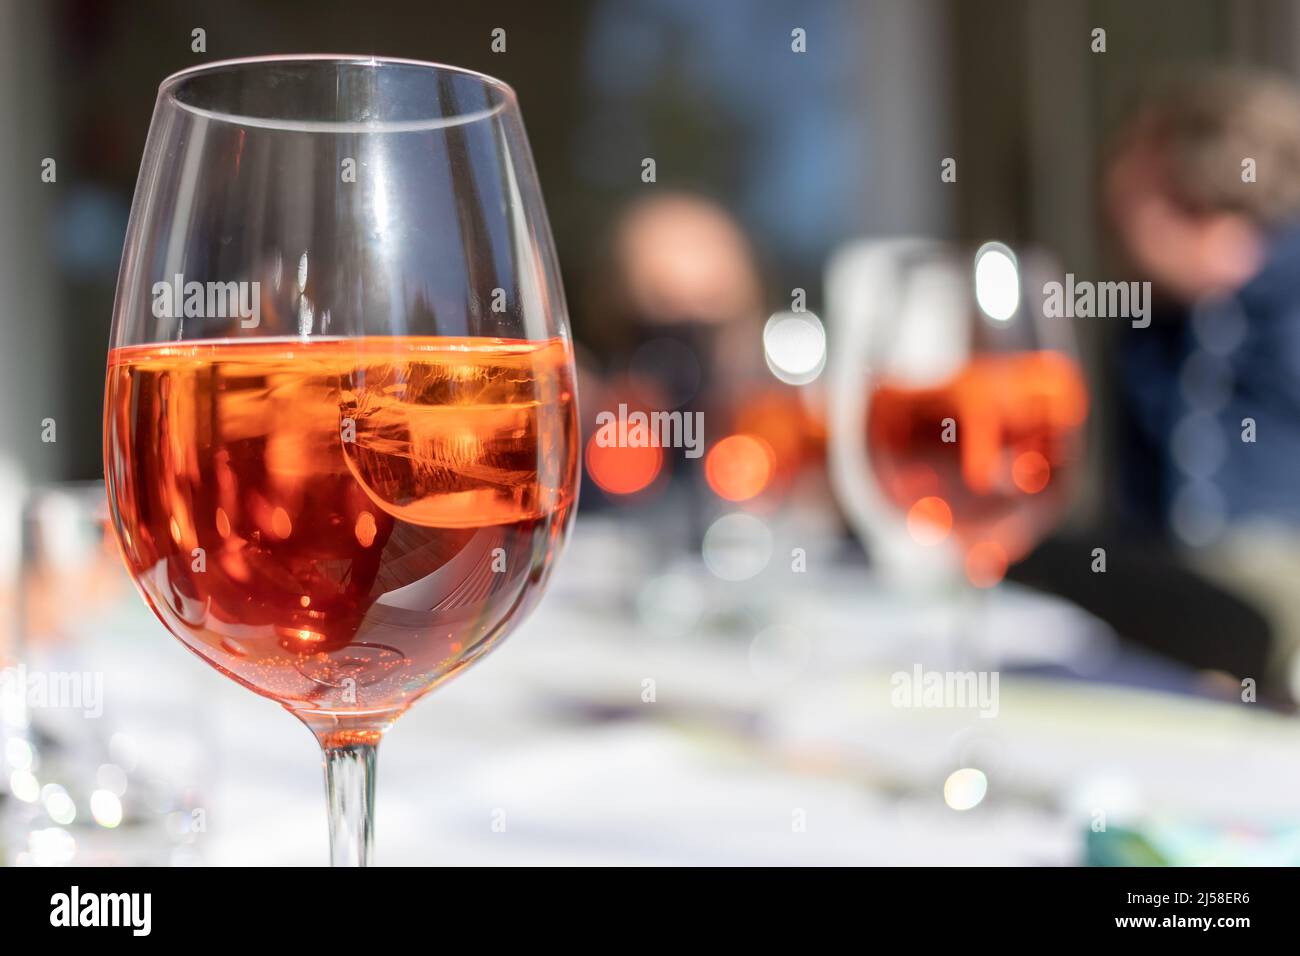 glass with reddish aperitif on ice Stock Photo